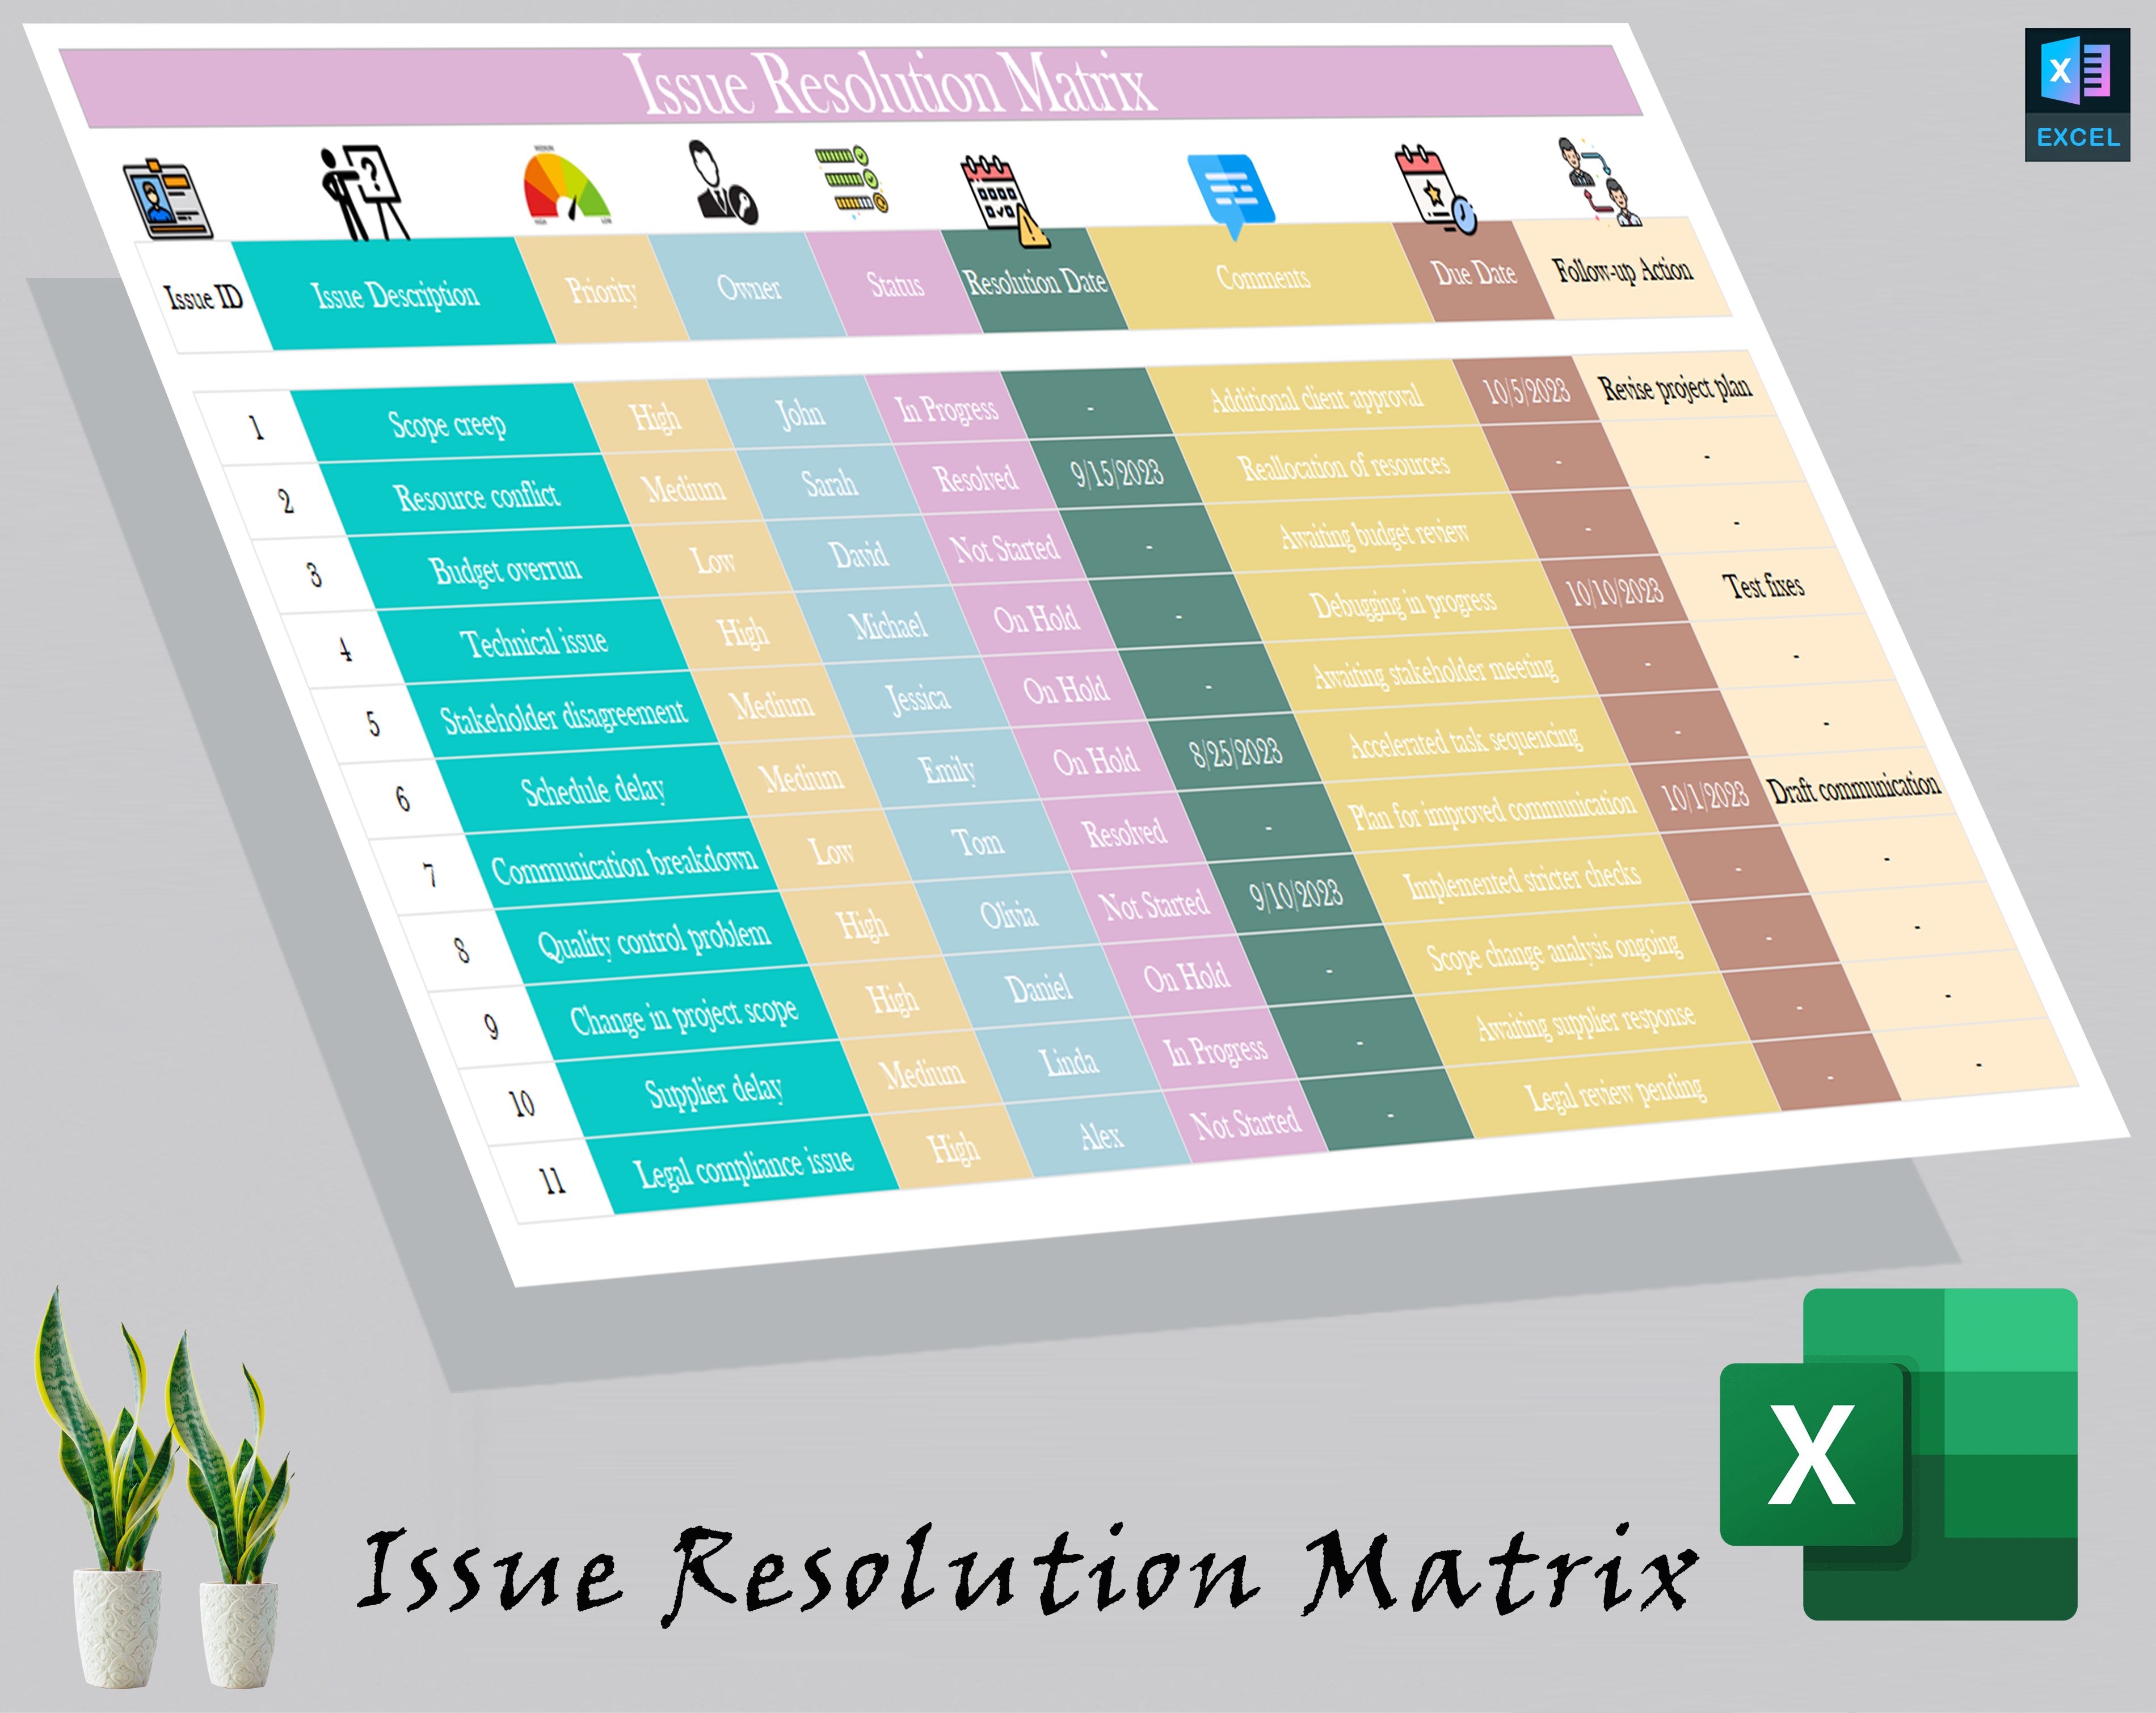 Issue Resolution Matrix | Problem-Solving Matrix